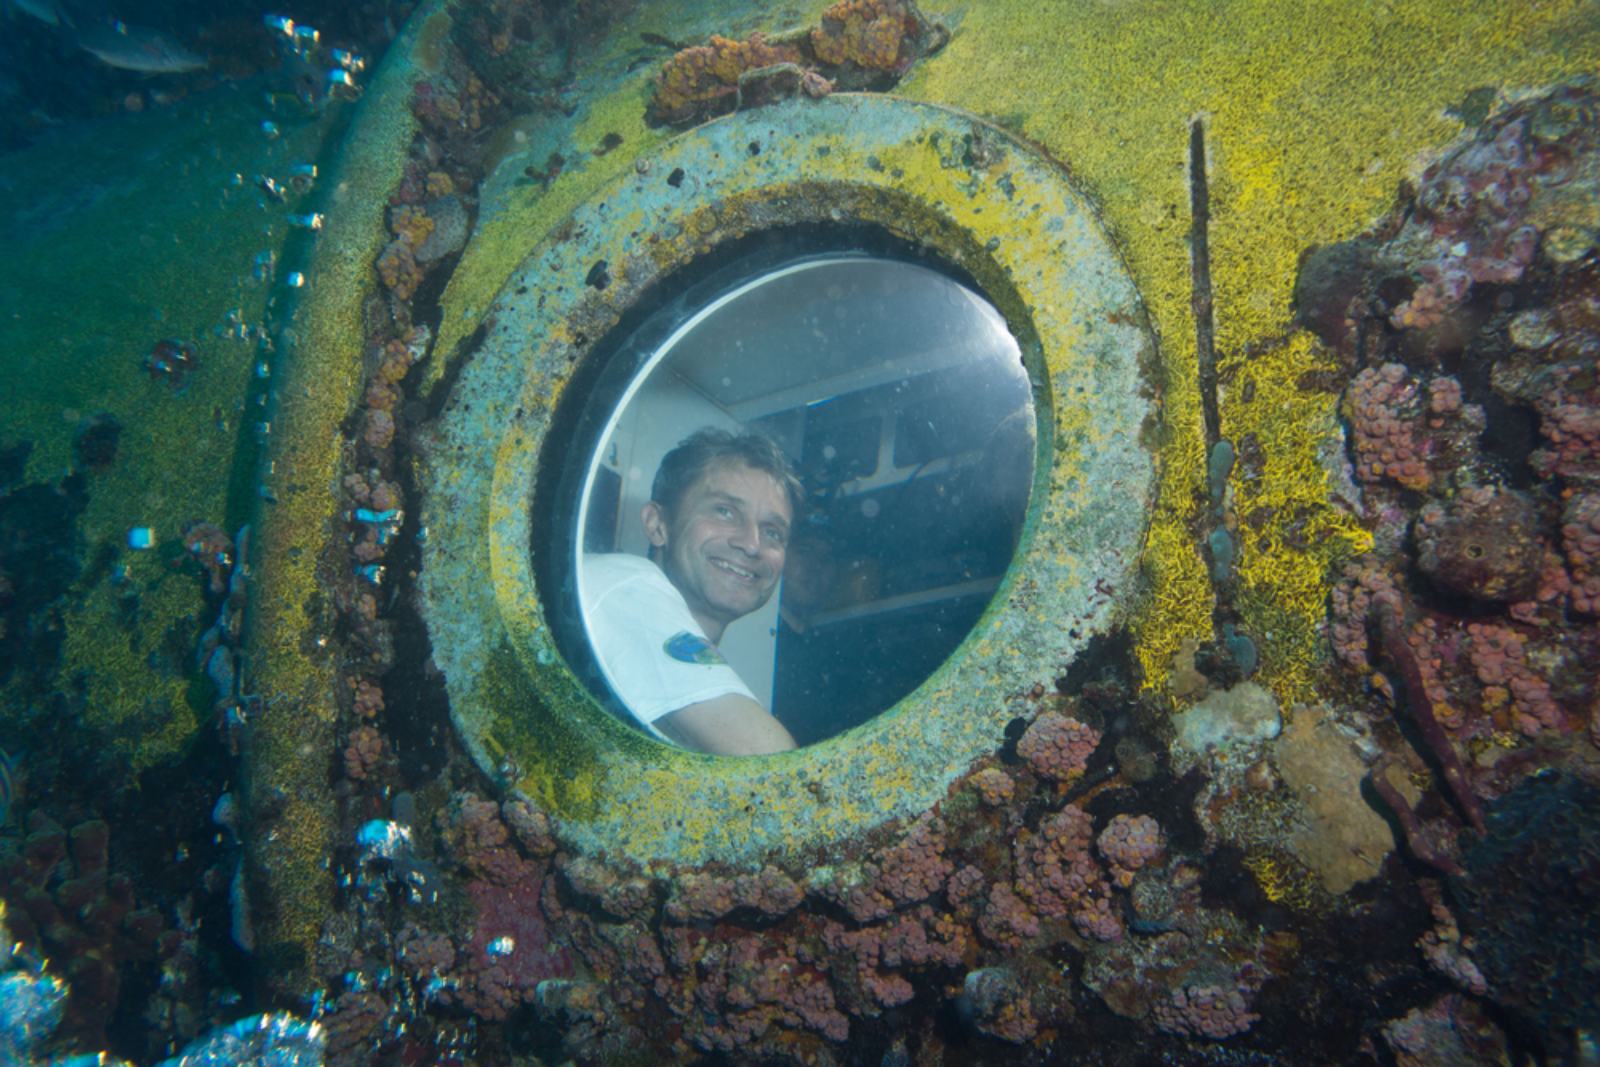 Яма на дне озера 5. Жак Ив Кусто подводная станция. Жак Ив Кусто подводный дом. Жак Ив Кусто подводная база. Жак Ив Кусто подводные дома.